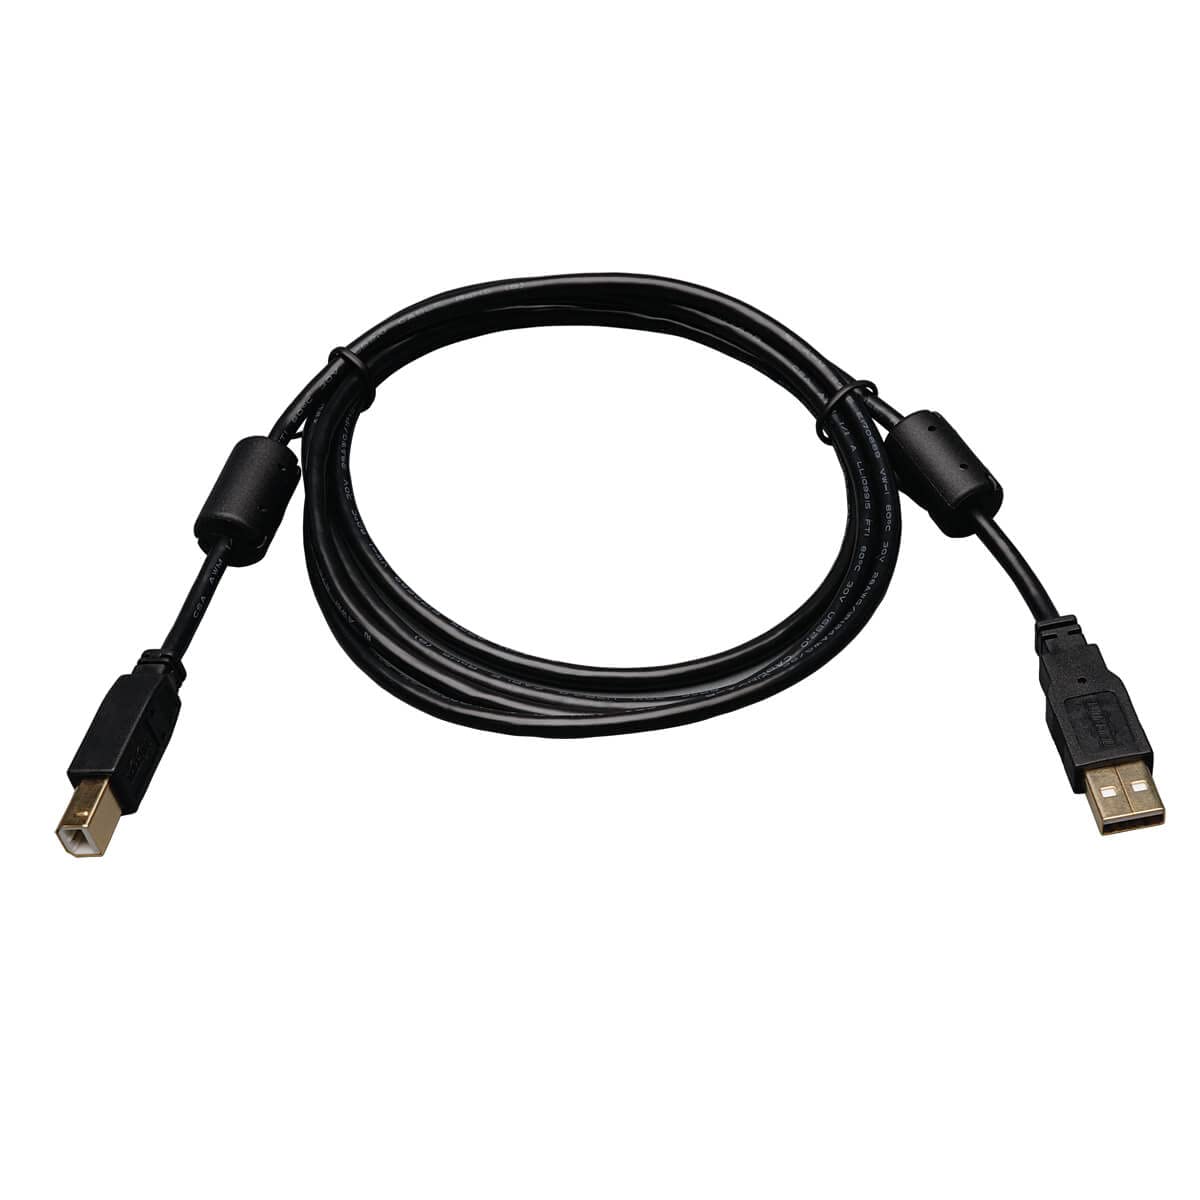 Tripp Lite USB 2.0 Hi-Speed A/B Cable with Ferrite Chokes (M/M) 3-ft. (U023-003)